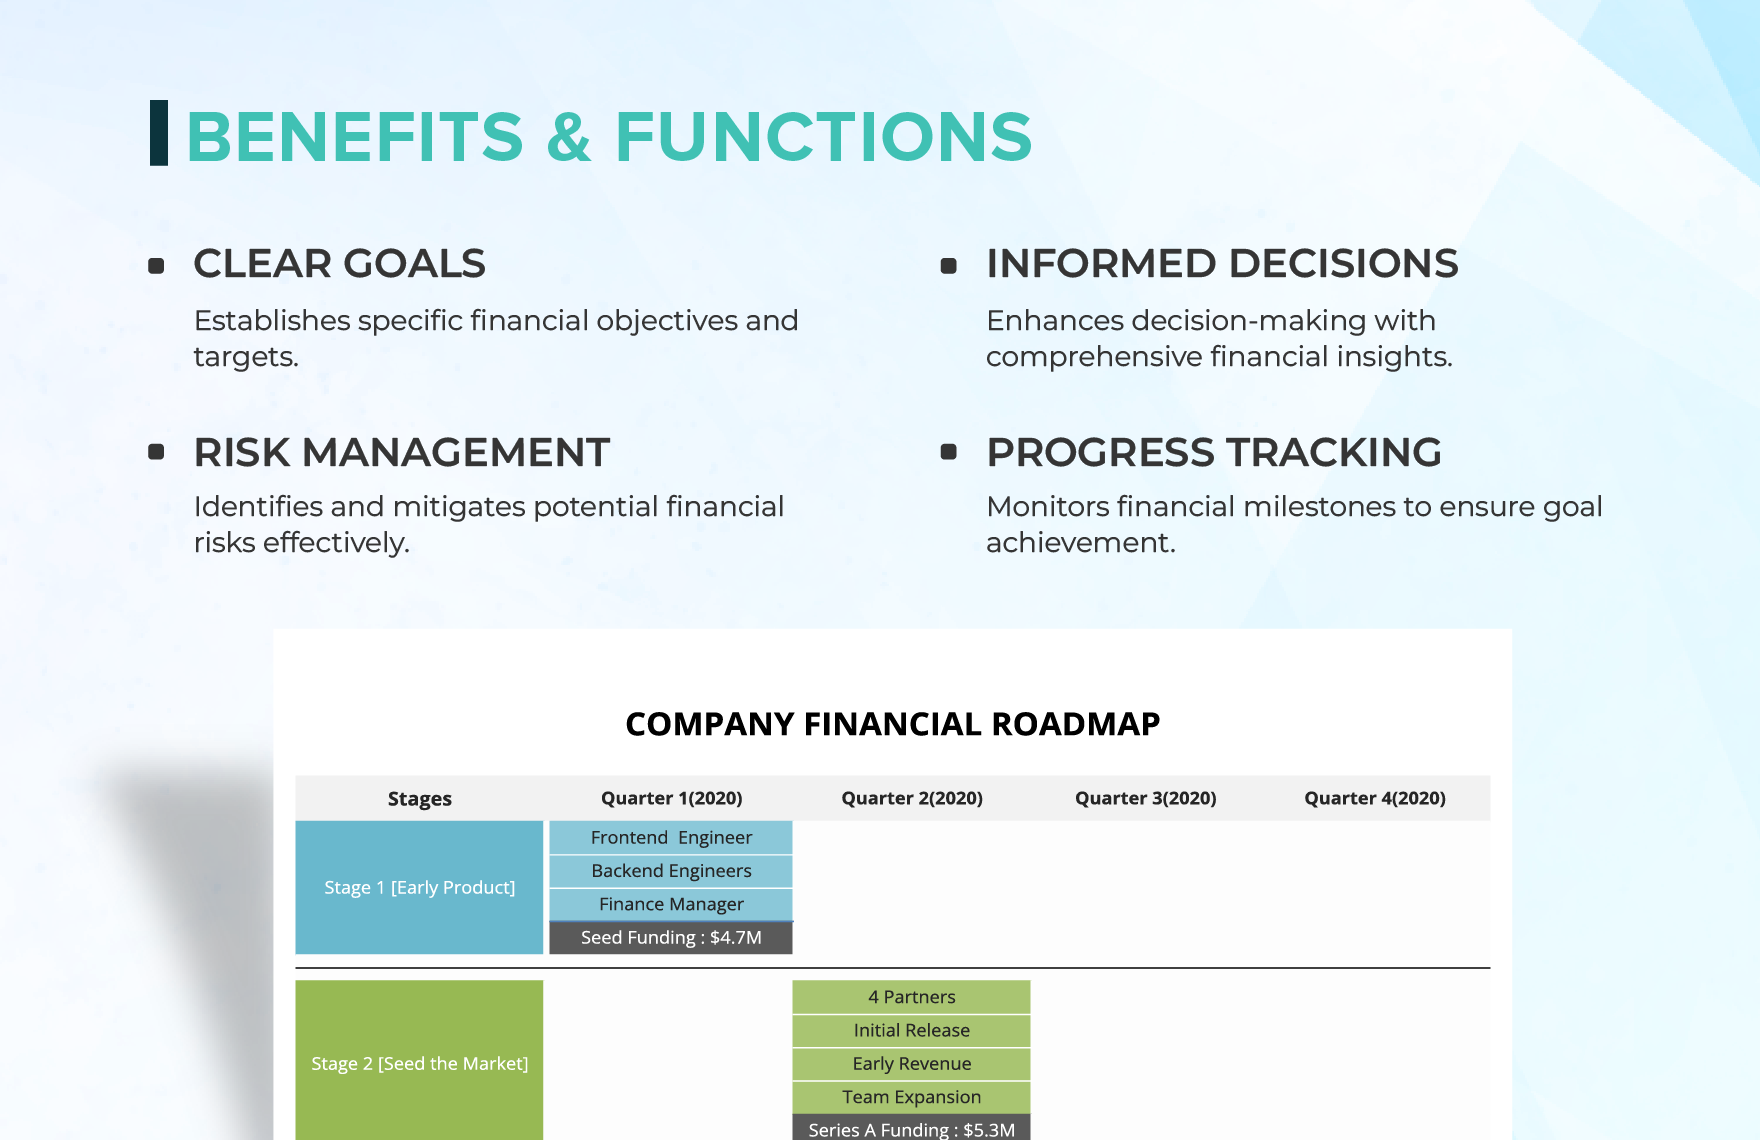 Company Financial Roadmap Template